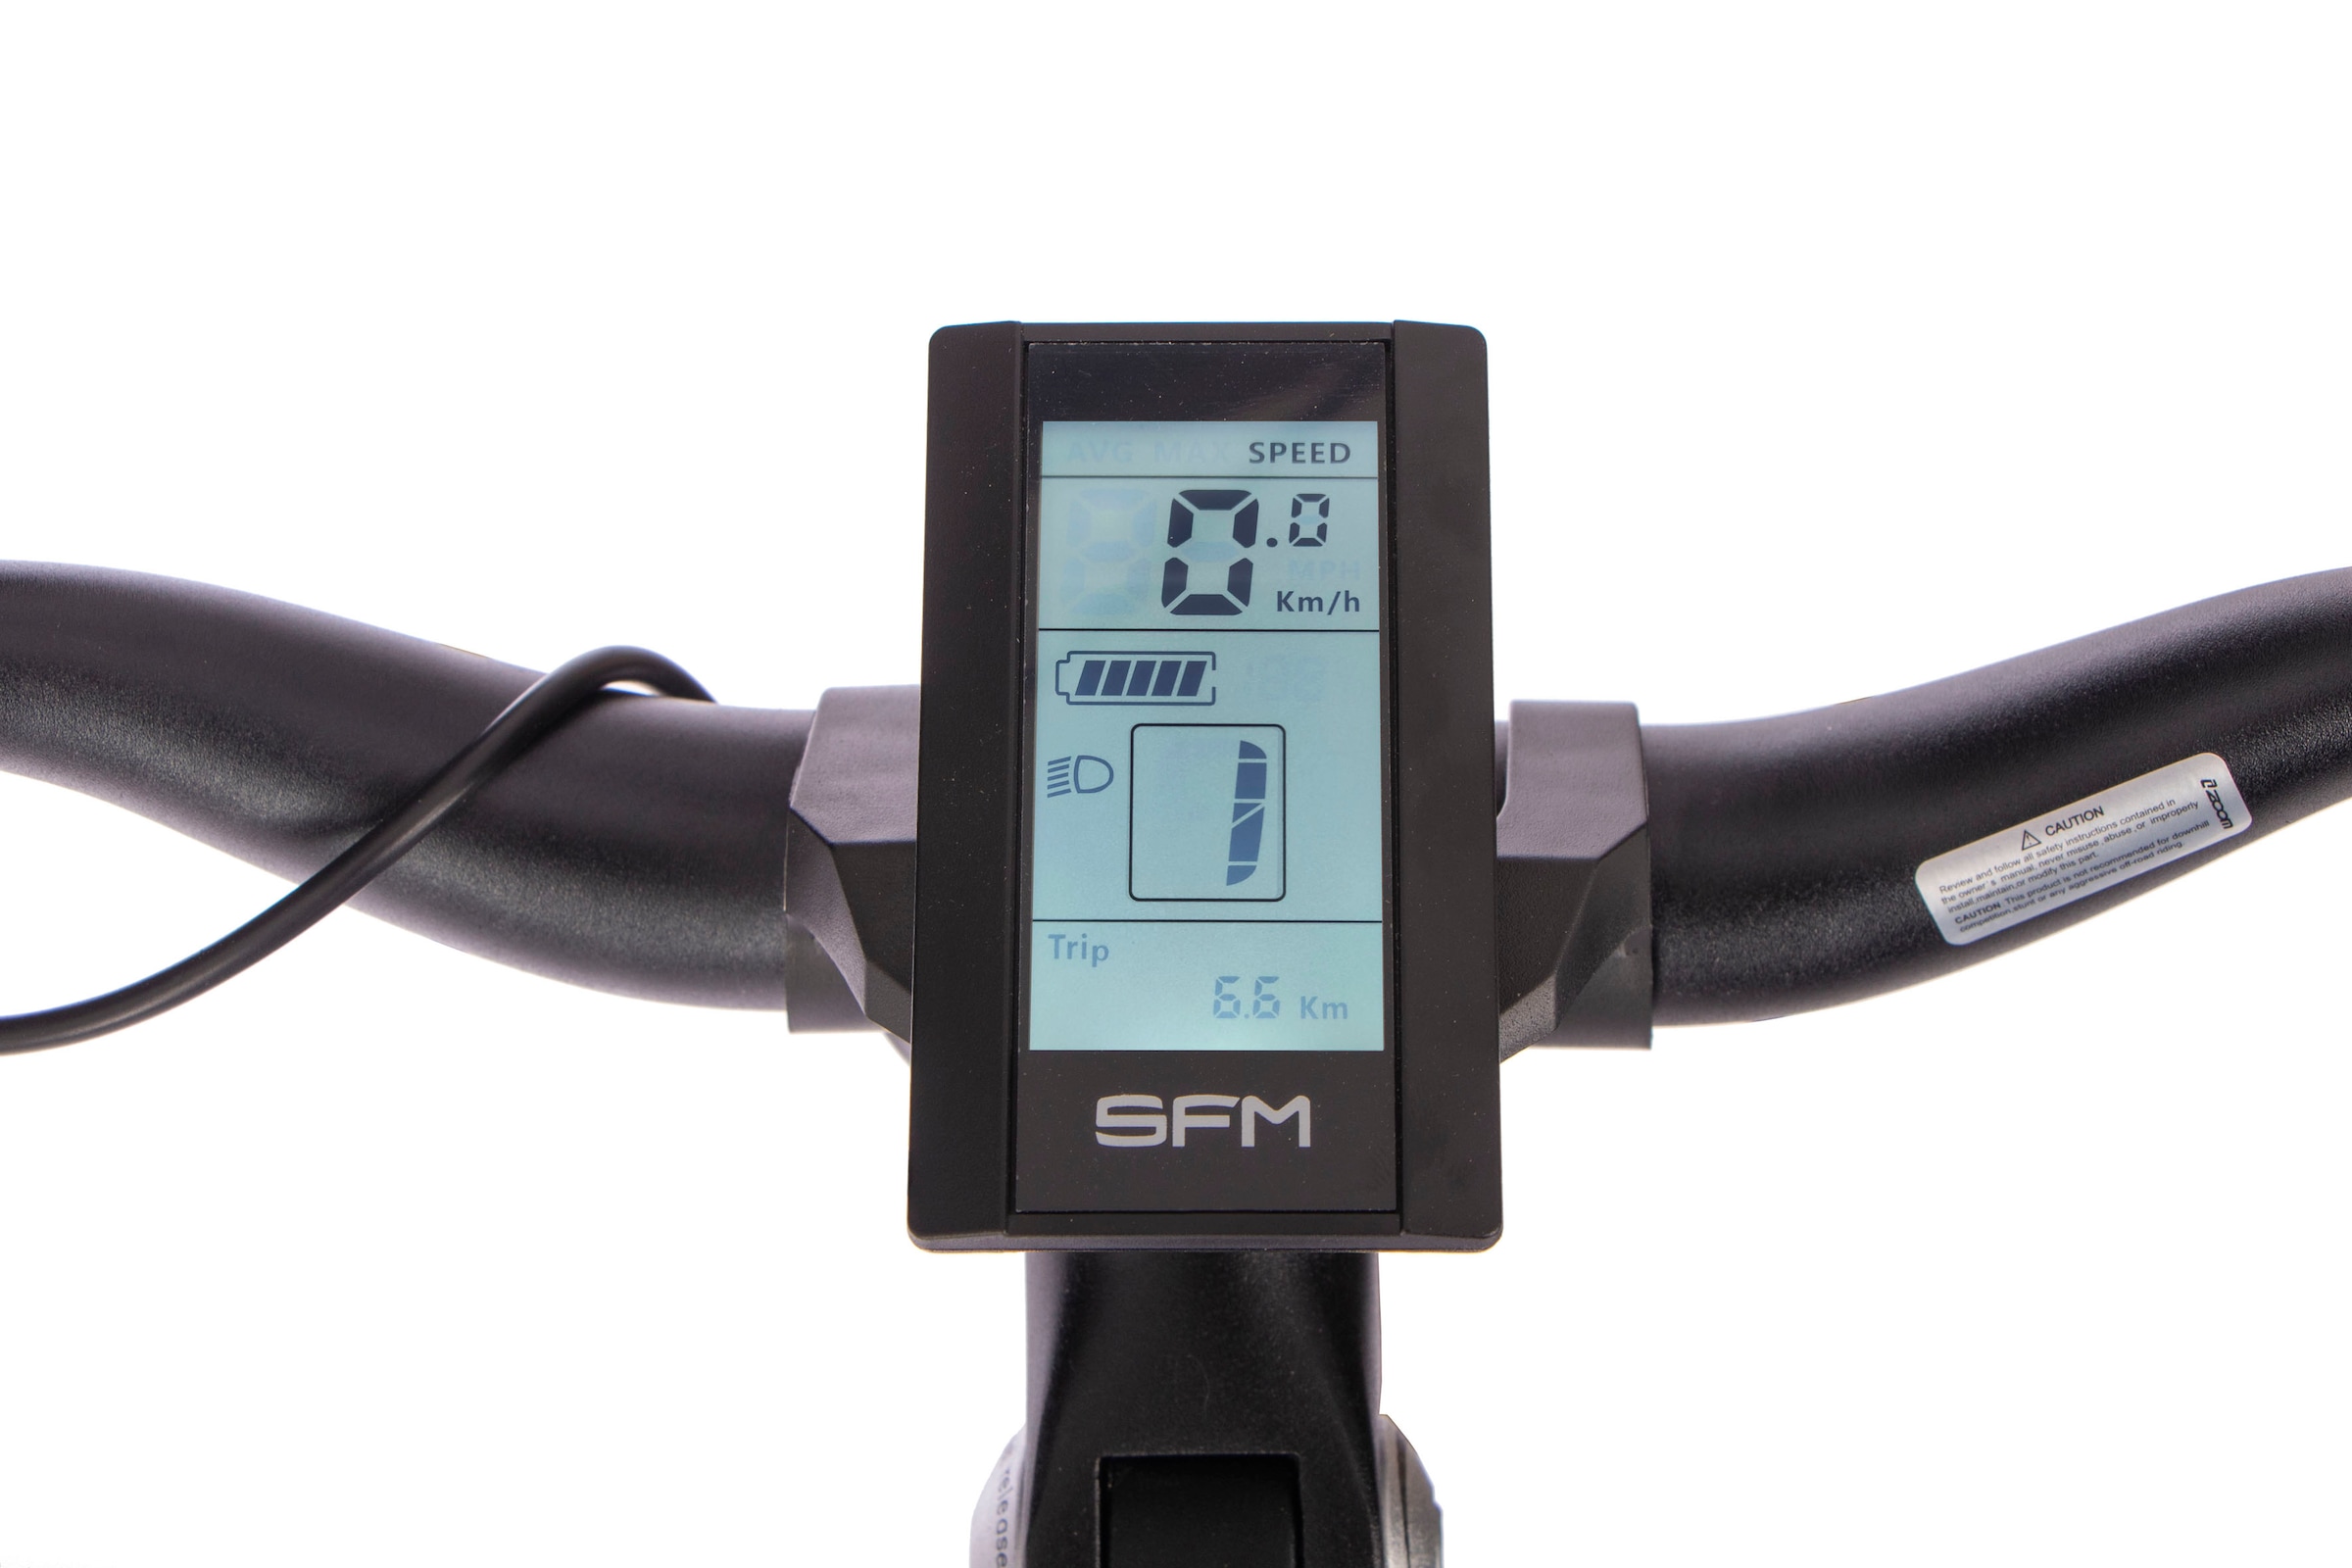 SAXONETTE E-Bike »Premium Plus 3.0«, 8 Gang, Mittelmotor 250 W